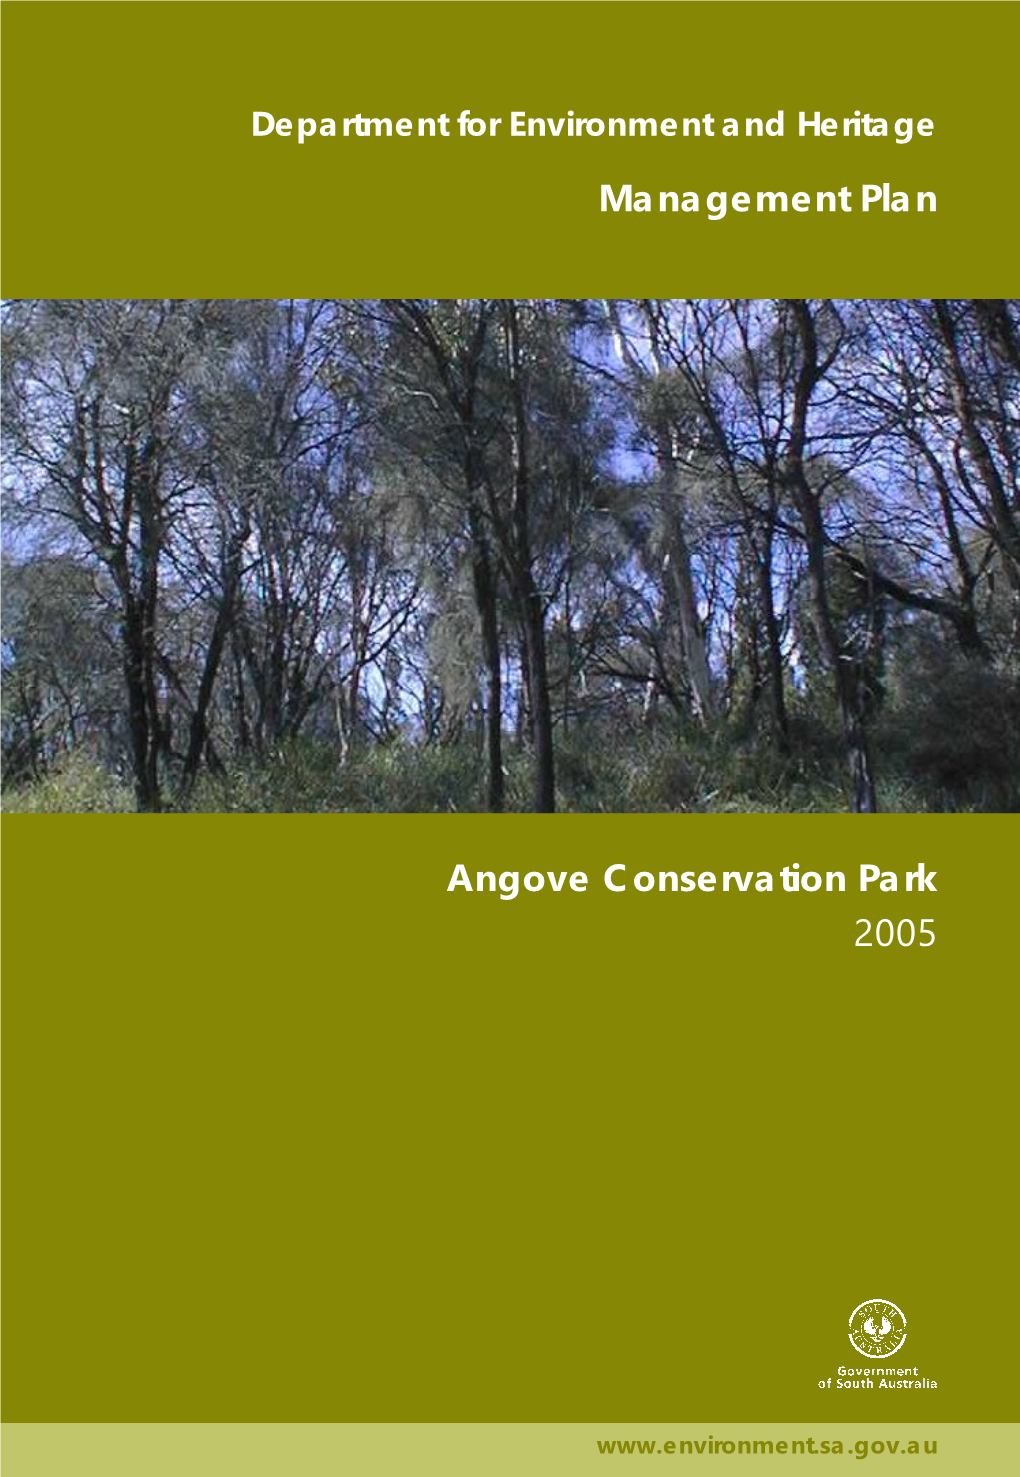 Angove Conservation Park Management Plan 2005 I